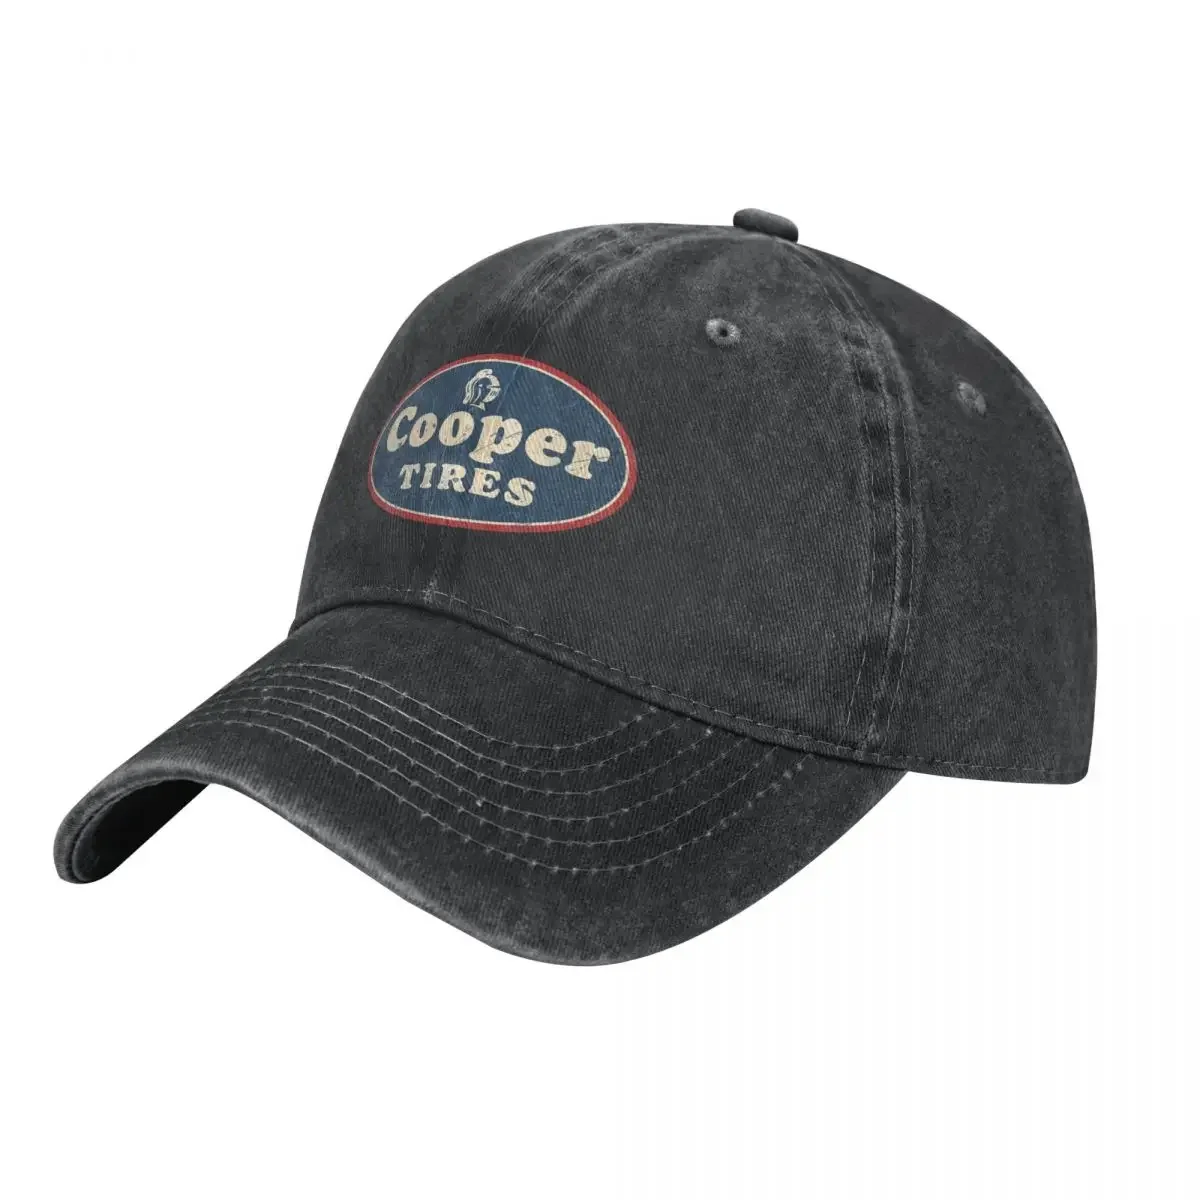 

Cooper Tires Vintage Funny Cowboy Hat Beach Fashion Beach Wild Ball Hat Rave Cap Male Hip Hop Summer Baseball Caps for Men Women